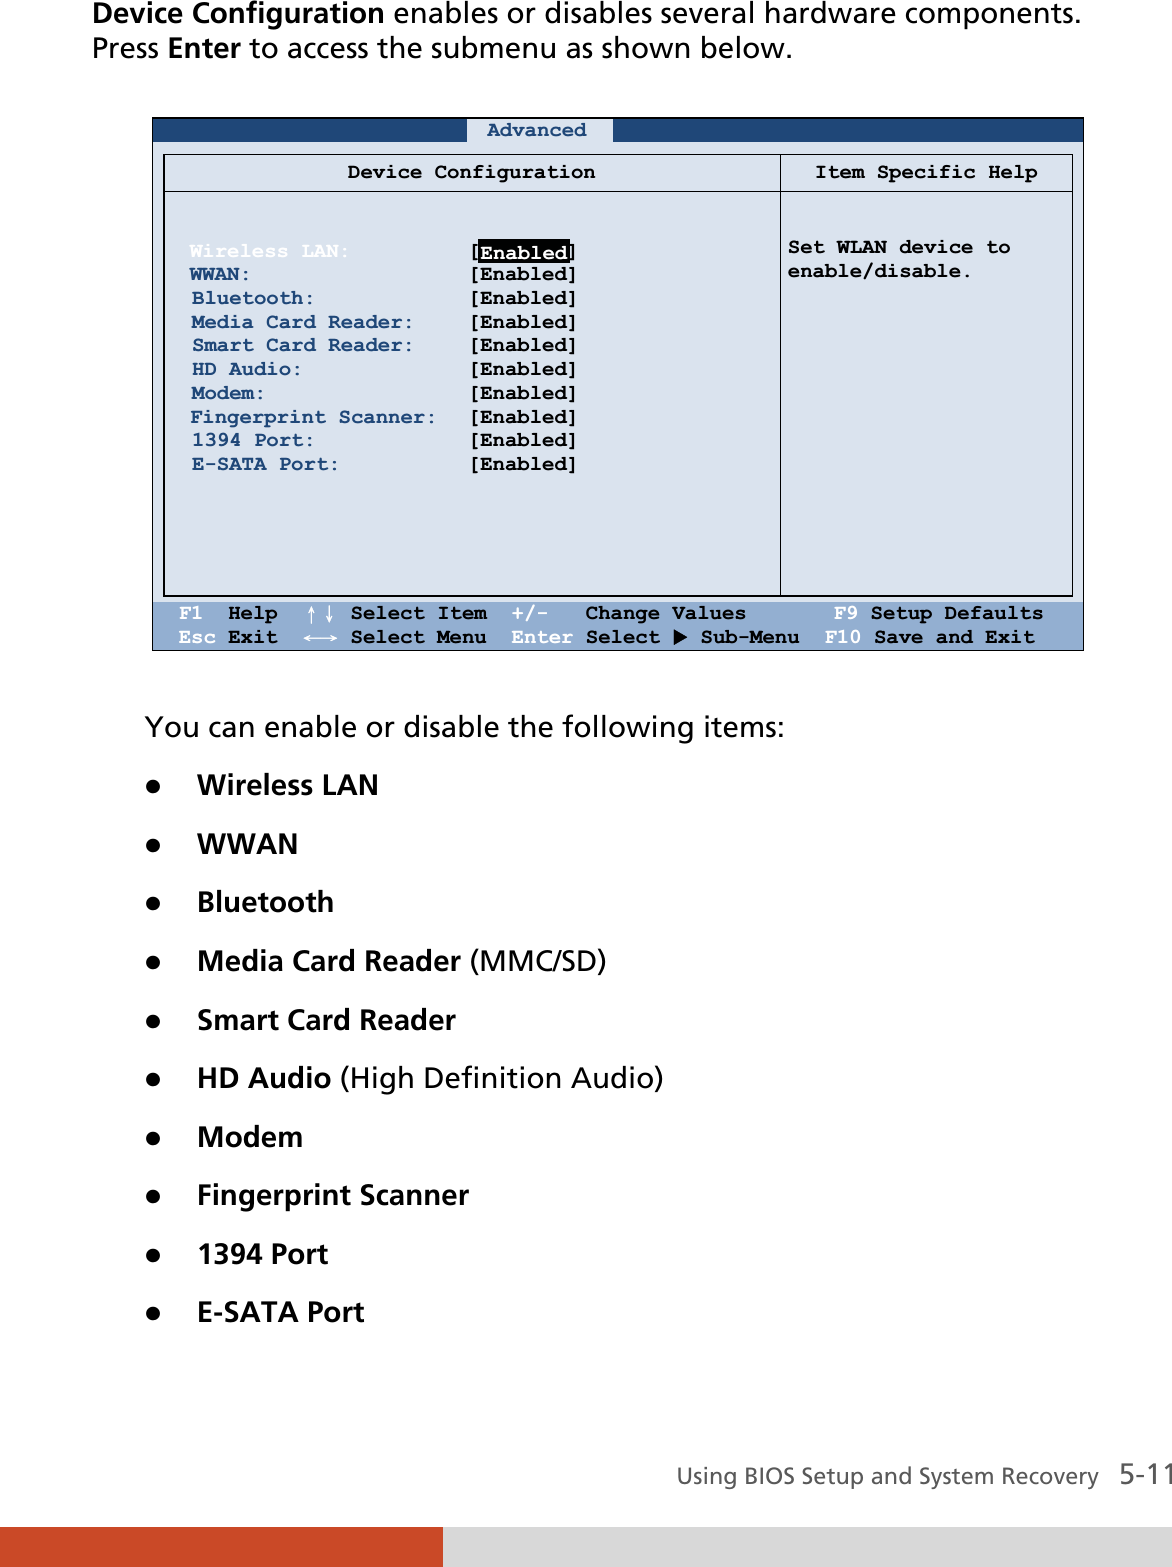  Using BIOS Setup and System Recovery   5-11 Device Configuration enables or disables several hardware components. Press Enter to access the submenu as shown below.     Advanced             Device Configuration Item Specific Help   Wireless LAN: WWAN:  Bluetooth:  Media Card Reader:  Smart Card Reader:  HD Audio:  Modem: Fingerprint Scanner:  1394 Port:  E-SATA Port:        [       ] [Enabled] [Enabled] [Enabled] [Enabled] [Enabled] [Enabled] [Enabled] [Enabled] [Enabled]   Set WLAN device to enable/disable.    F1  Help  ɥɧ Select Item  +/-   Change Values       F9 Setup Defaults Esc Exit  ɤɦ Select Menu  Enter Select X Sub-Menu  F10 Save and Exit  You can enable or disable the following items: z Wireless LAN z WWAN z Bluetooth z Media Card Reader (MMC/SD) z Smart Card Reader z HD Audio (High Definition Audio) z Modem z Fingerprint Scanner z 1394 Port z E-SATA Port  Enabled